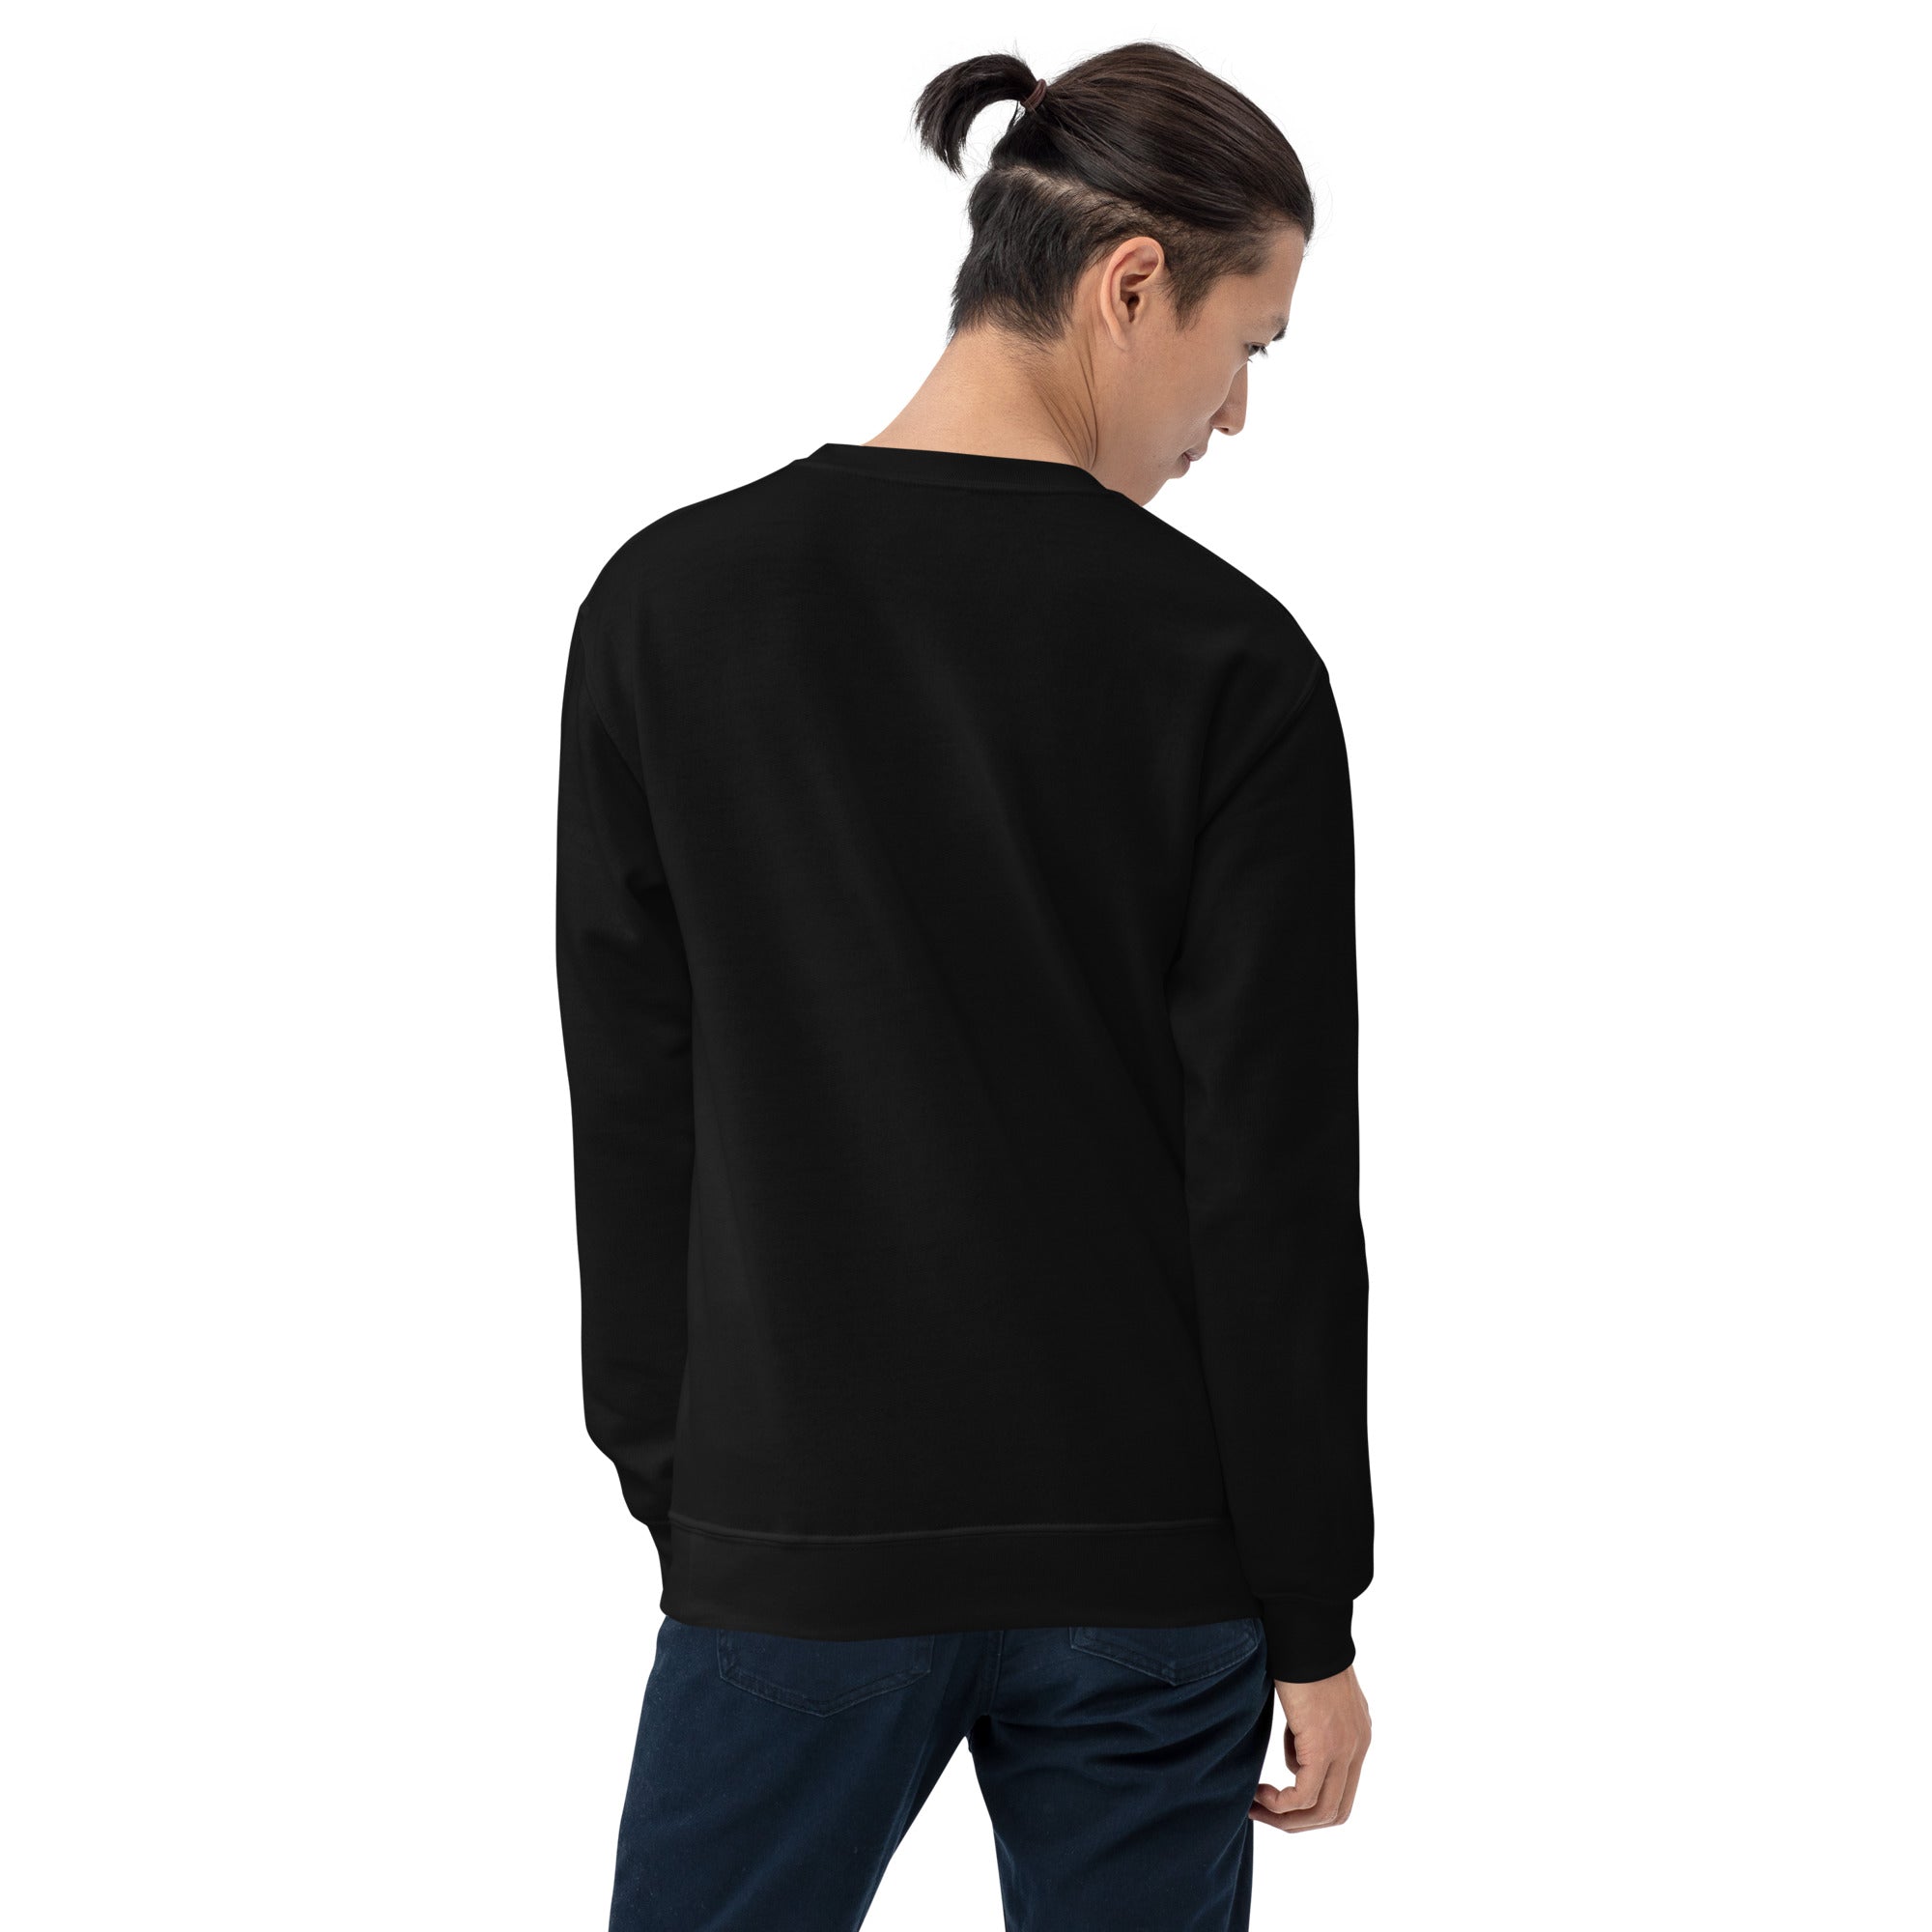 Futuristic Wired Bitcoin BTC Digital Crypto Sweatshirt Long Sleeve Pullover